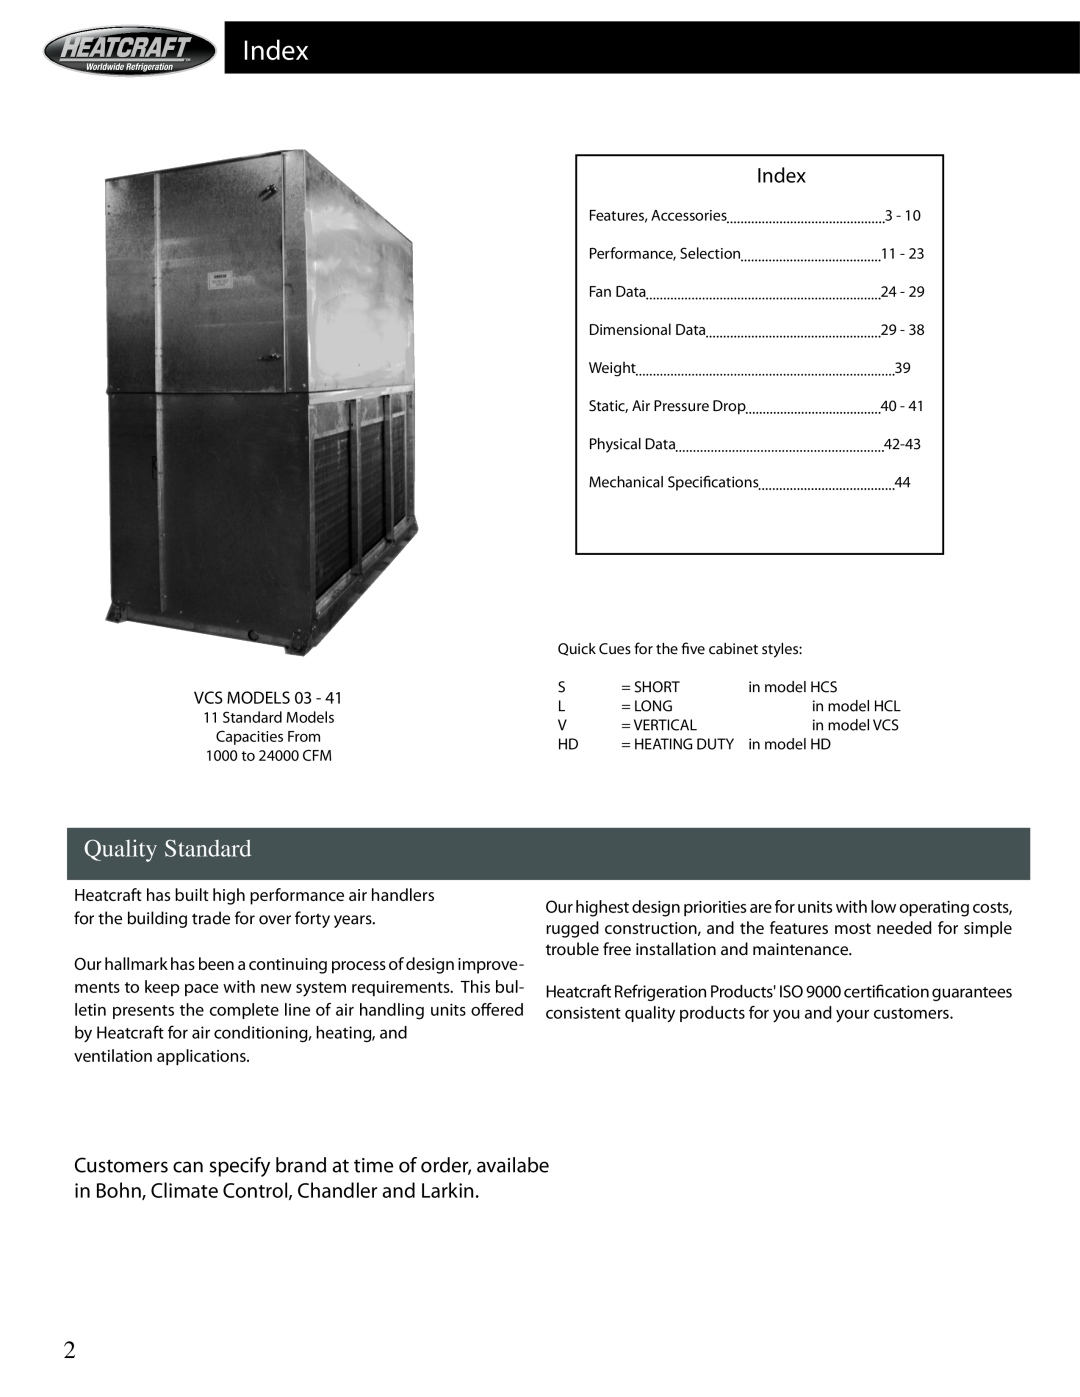 Heatcraft Refrigeration Products HCS manual Index, Quality Standard, Vcs Models, ventilation applications 